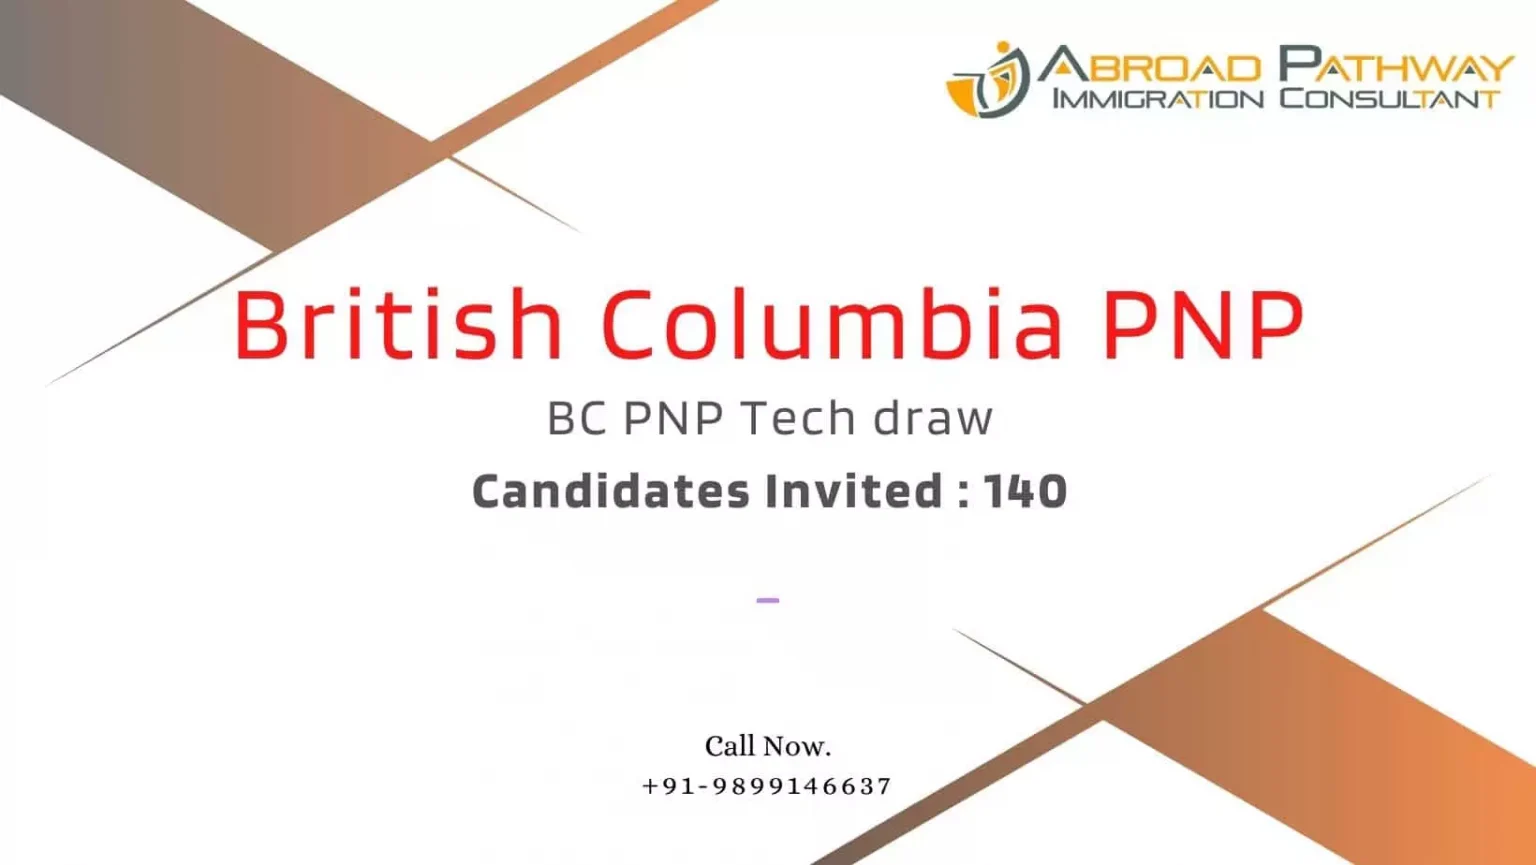 British Columbia PNP Tech draw issued 140 invitations